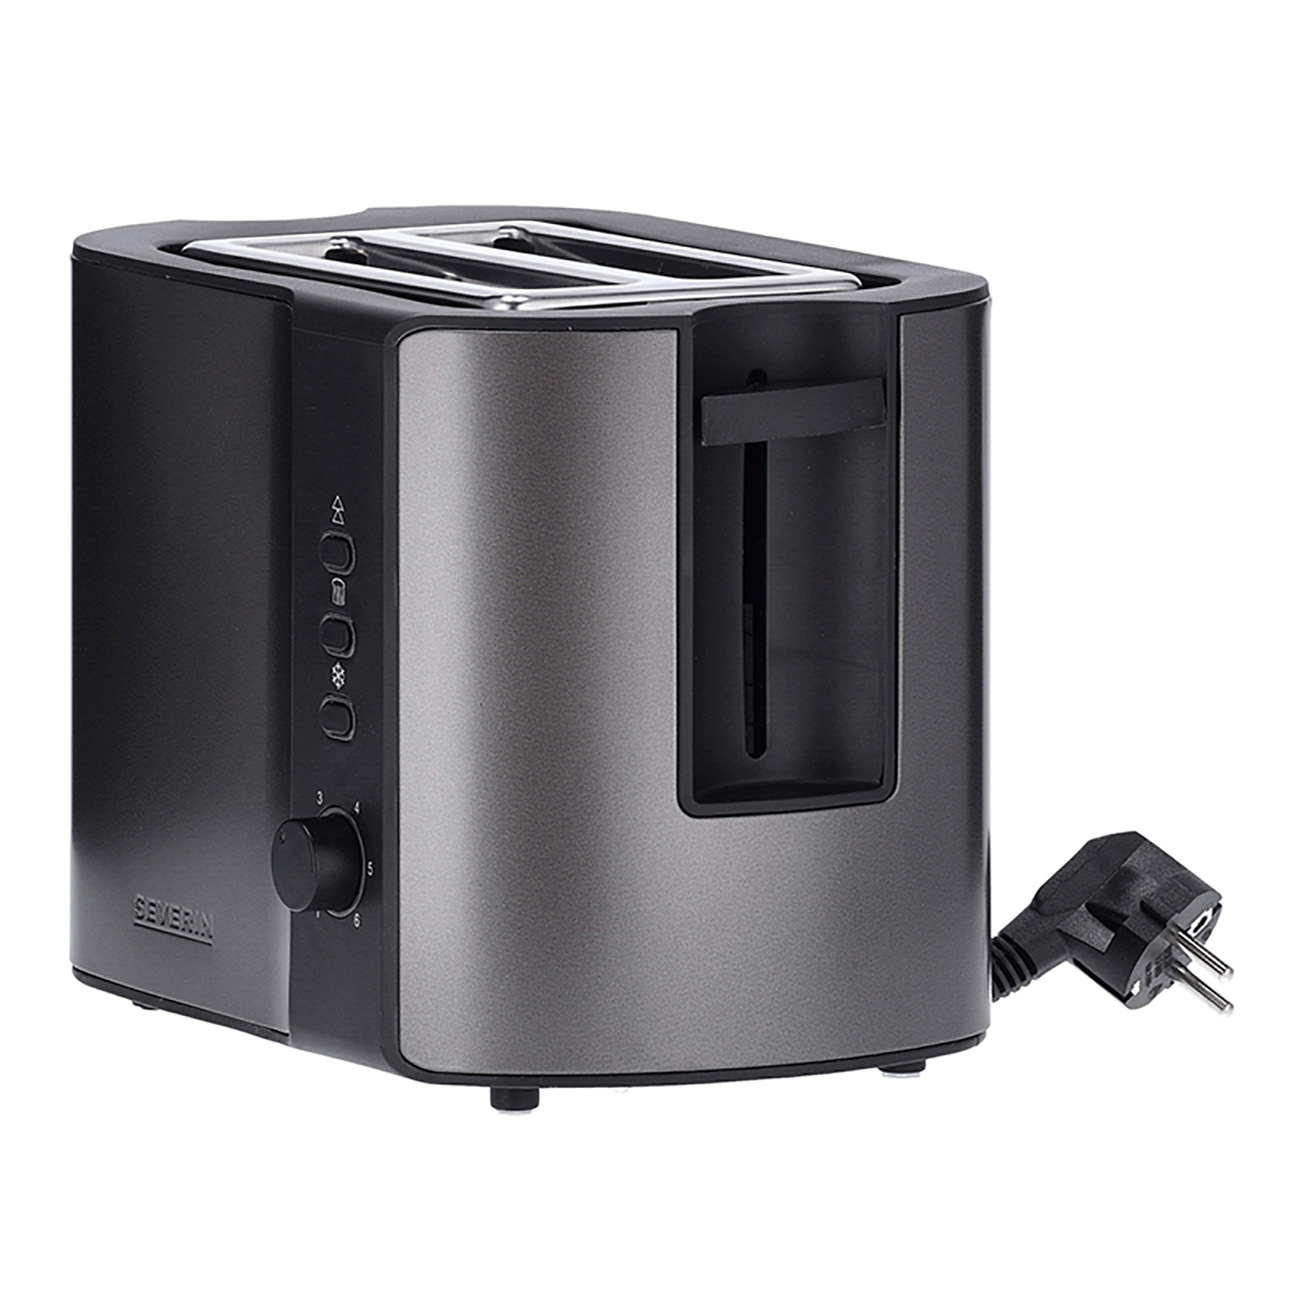 AT9541 Toaster Grau-metallic Watt, SEVERIN (860 2,0) Schwarz grau-met./schwarz Schlitze: / Toaster